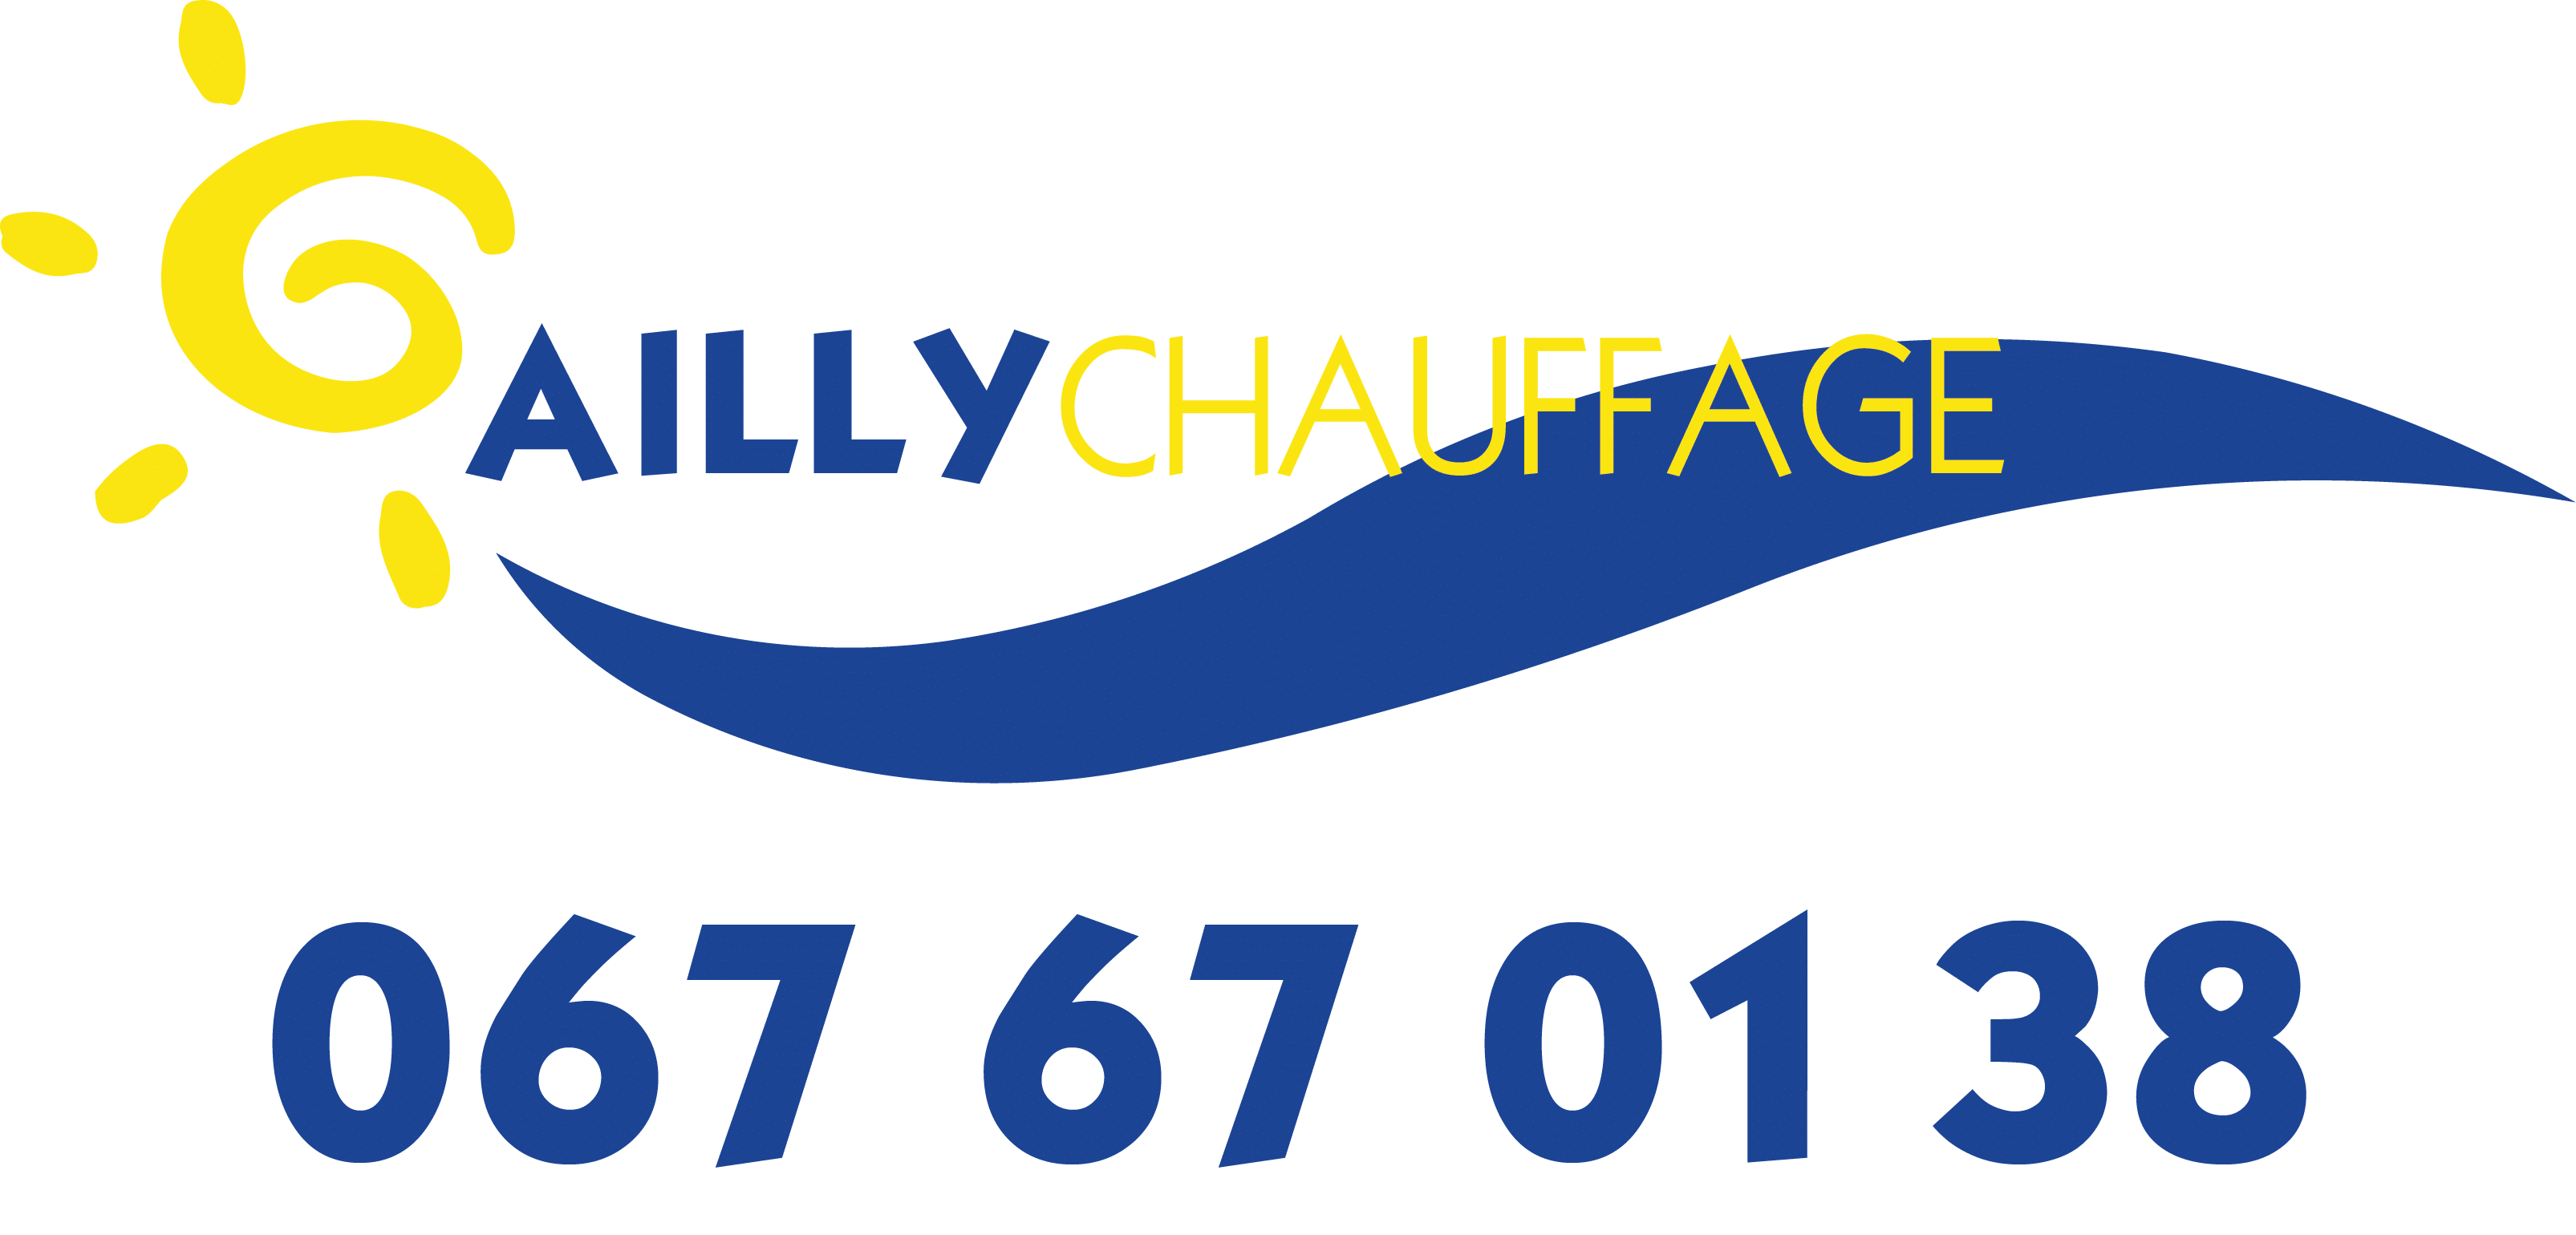 Votre plombier & chauffagiste – Gailly Chauffage